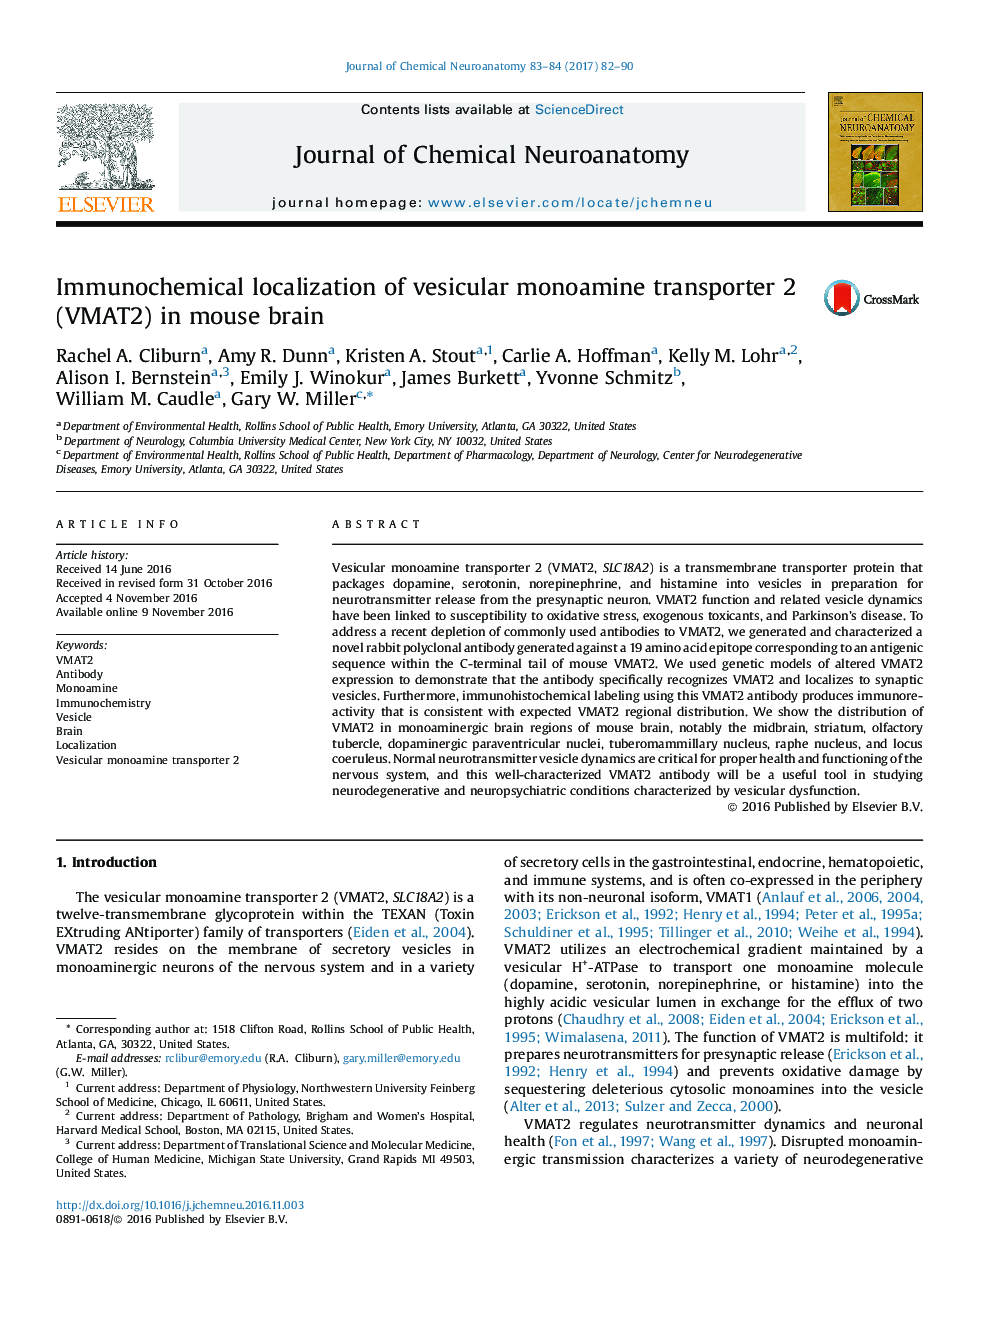 Immunochemical localization of vesicular monoamine transporter 2 (VMAT2) in mouse brain